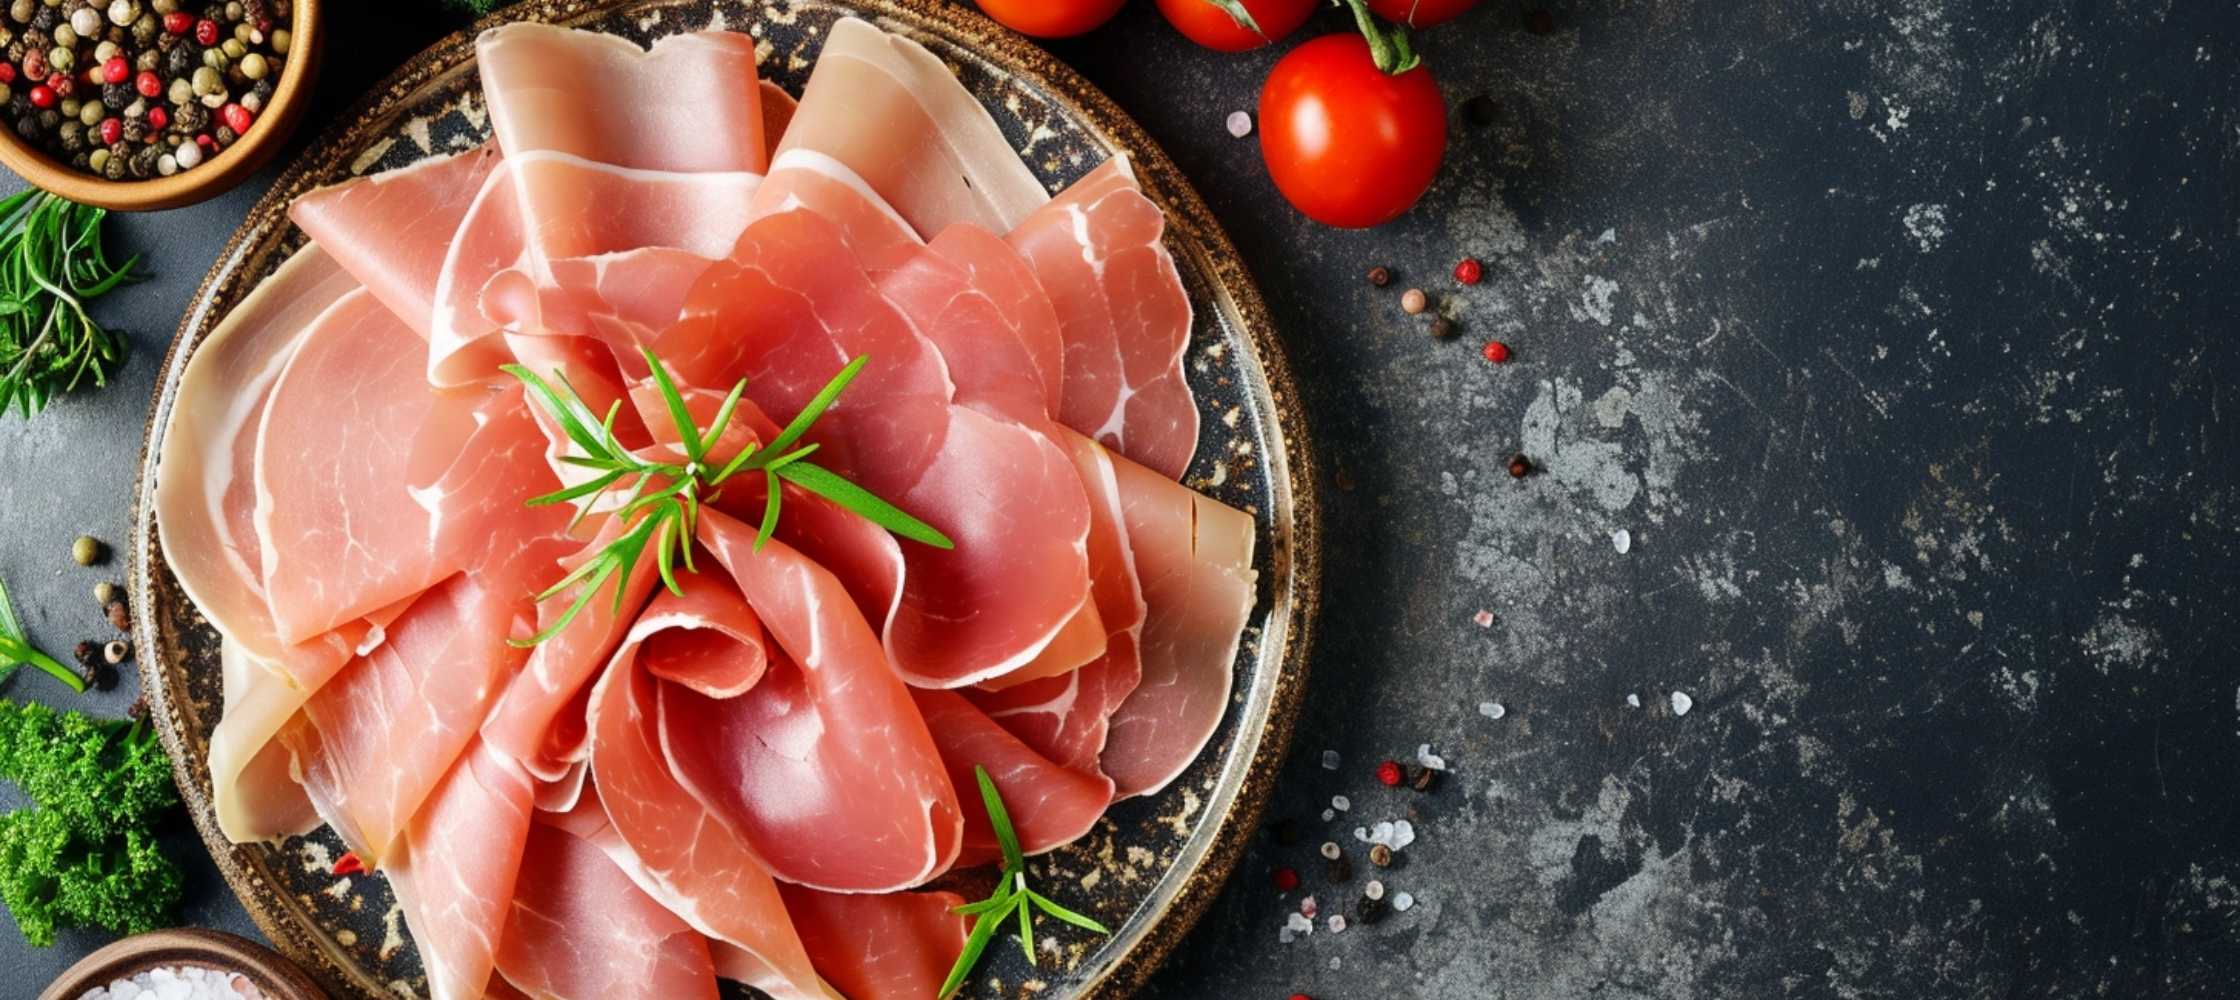 Healthy Bologna Alternatives for Conscious Eaters